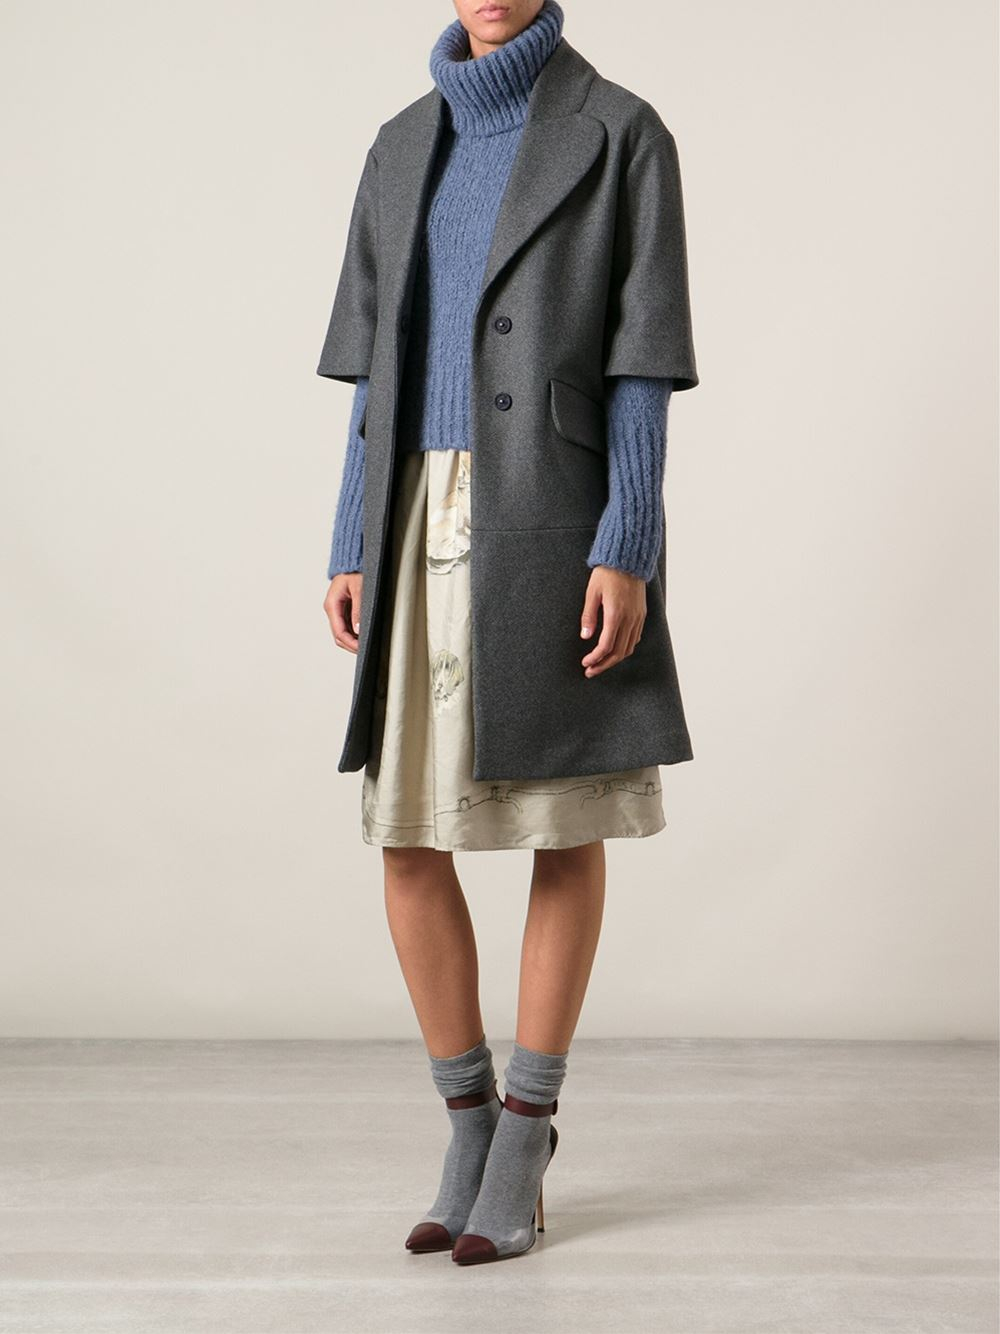 Lyst - Erika Cavallini Semi Couture Short Sleeved Coat in Gray